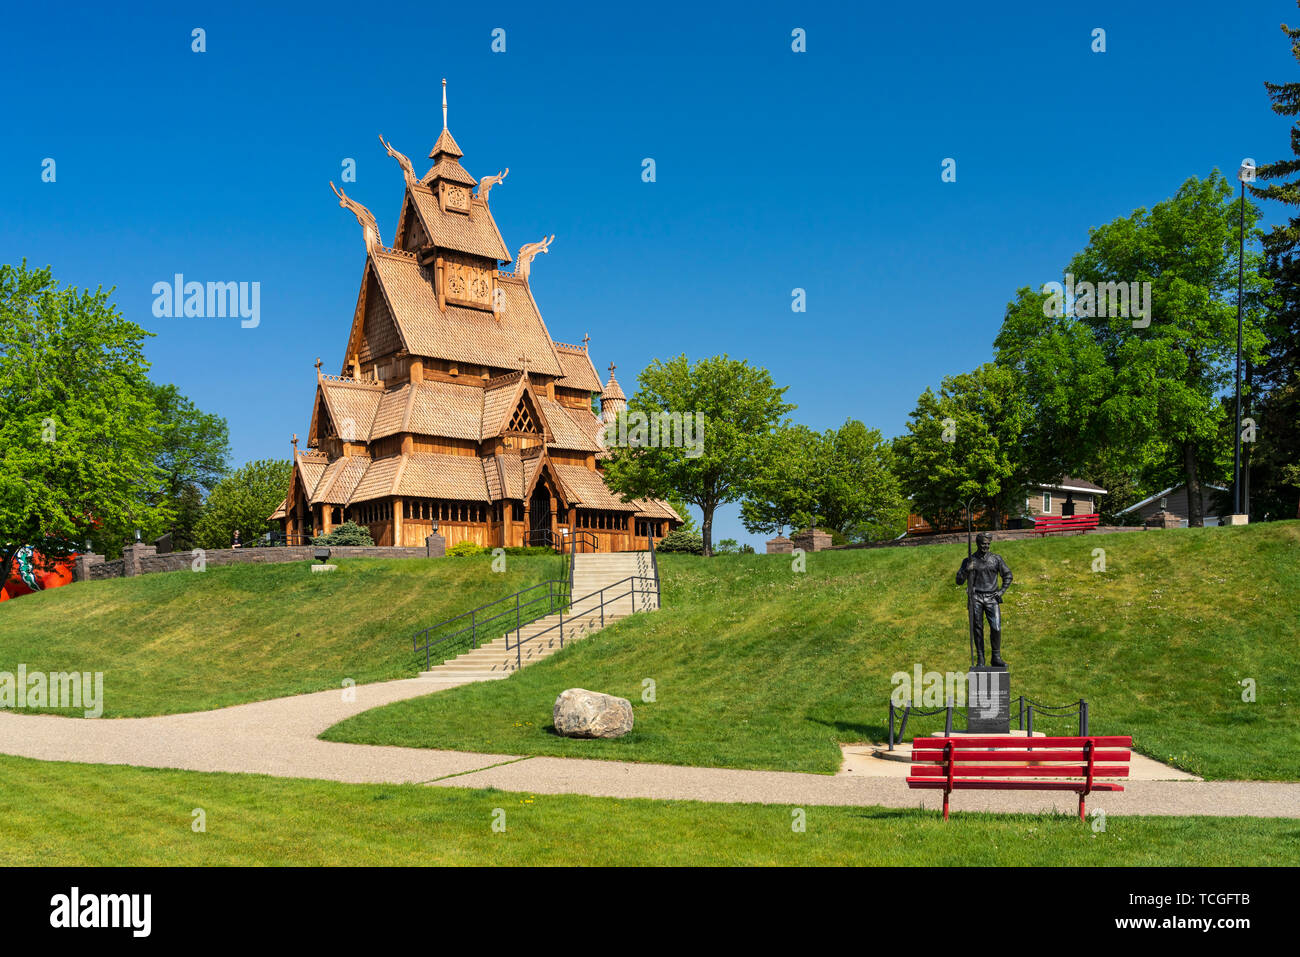 The Stave Church at the Scandinavian Heritage Park in Minot, North Dakota, USA. Stock Photo